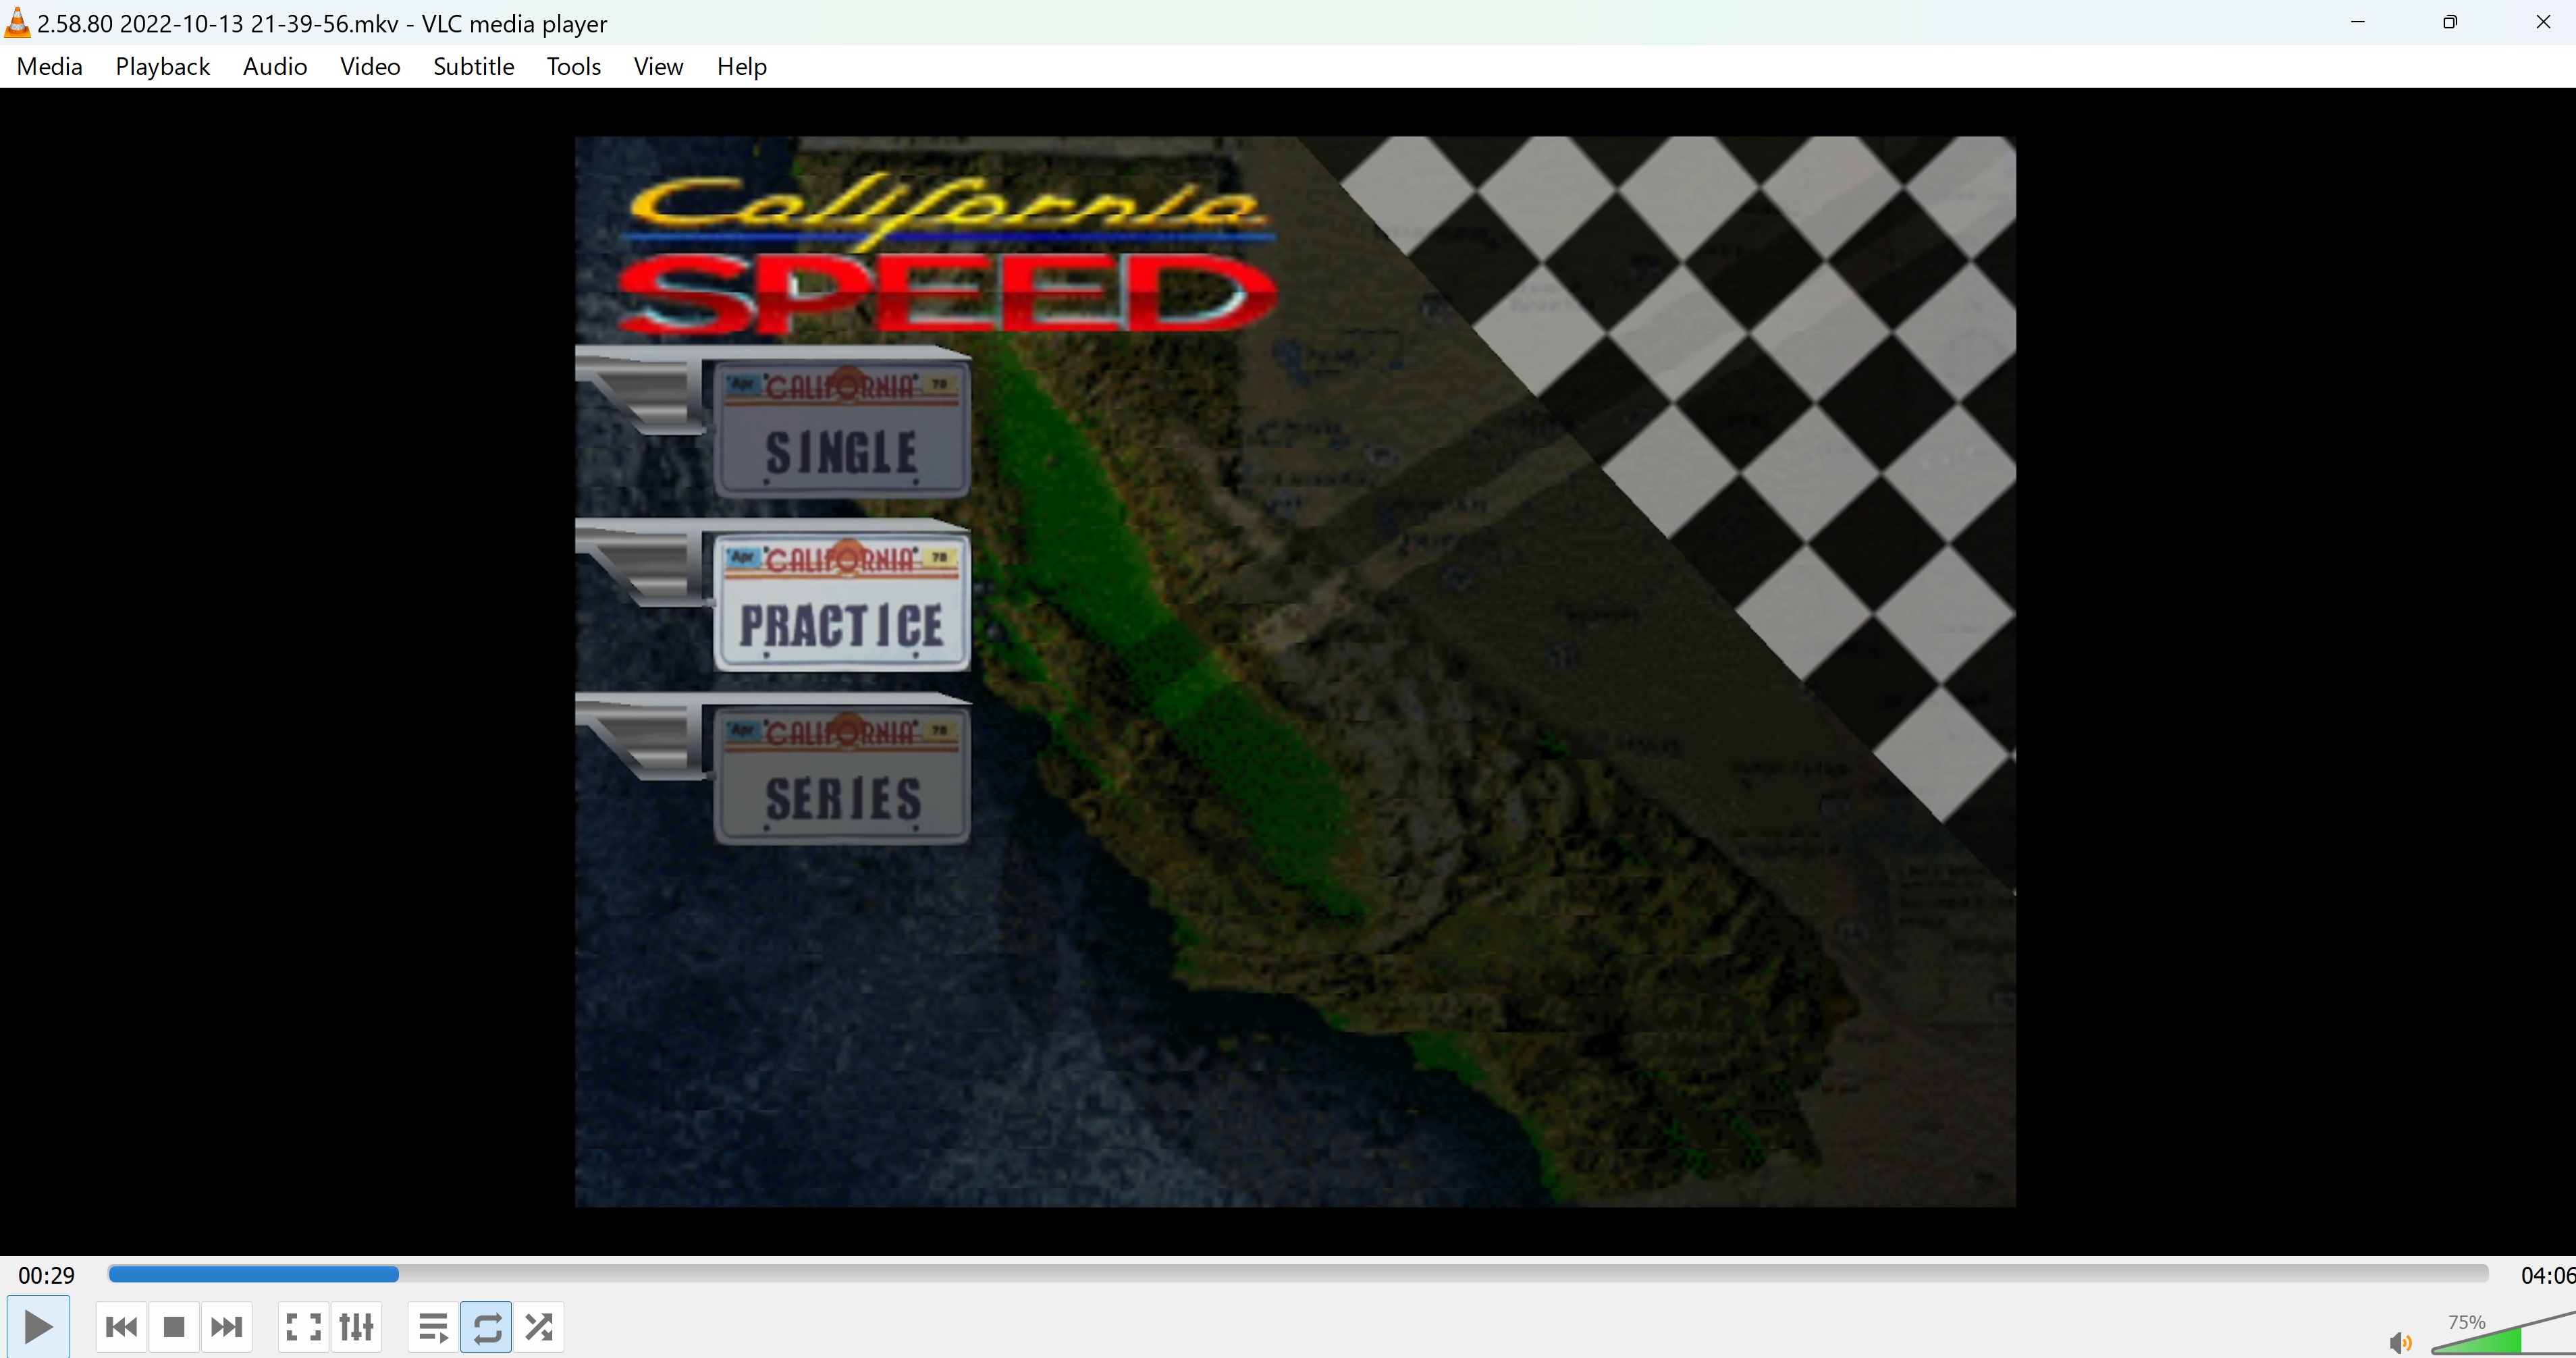 California Speed: Practice [Highway 1] time of 0:02:58.8